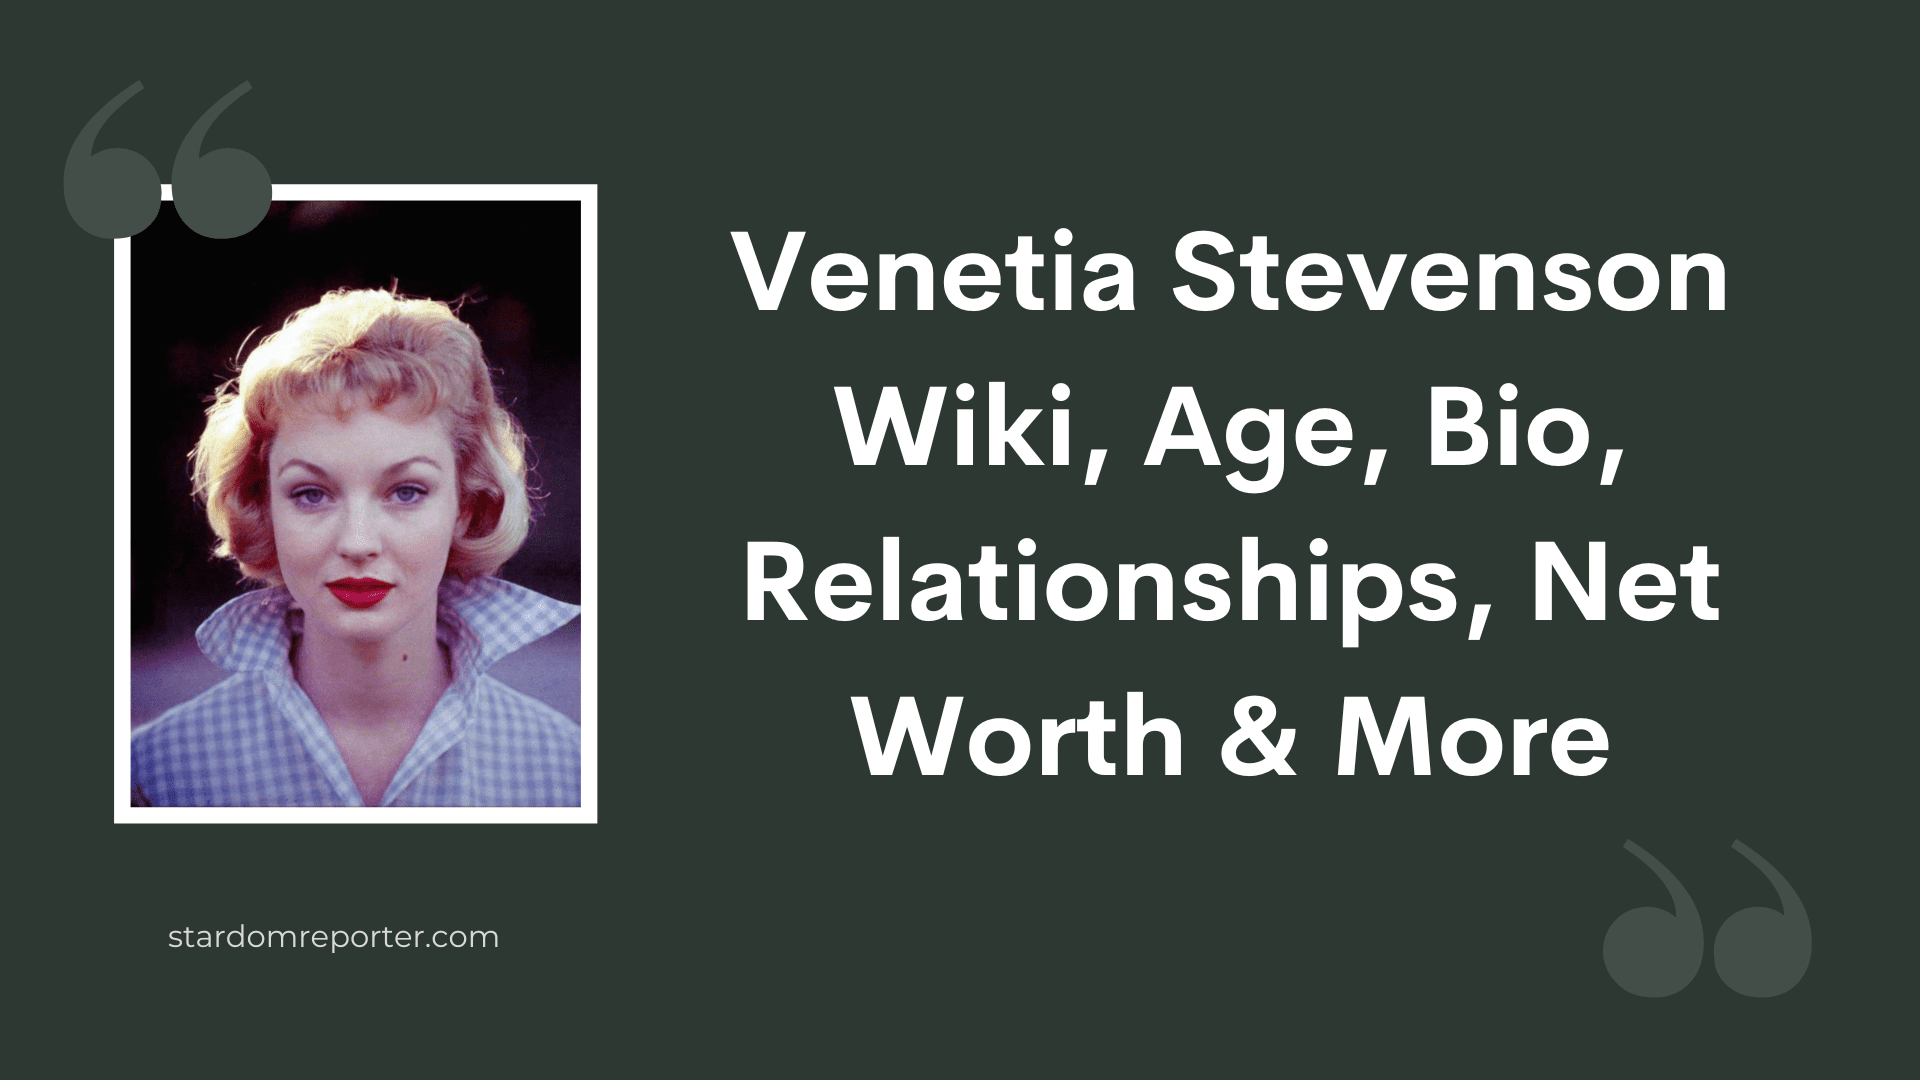 Venetia Stevenson Wiki, Age, Bio, Relationships, Net Worth & More - 41